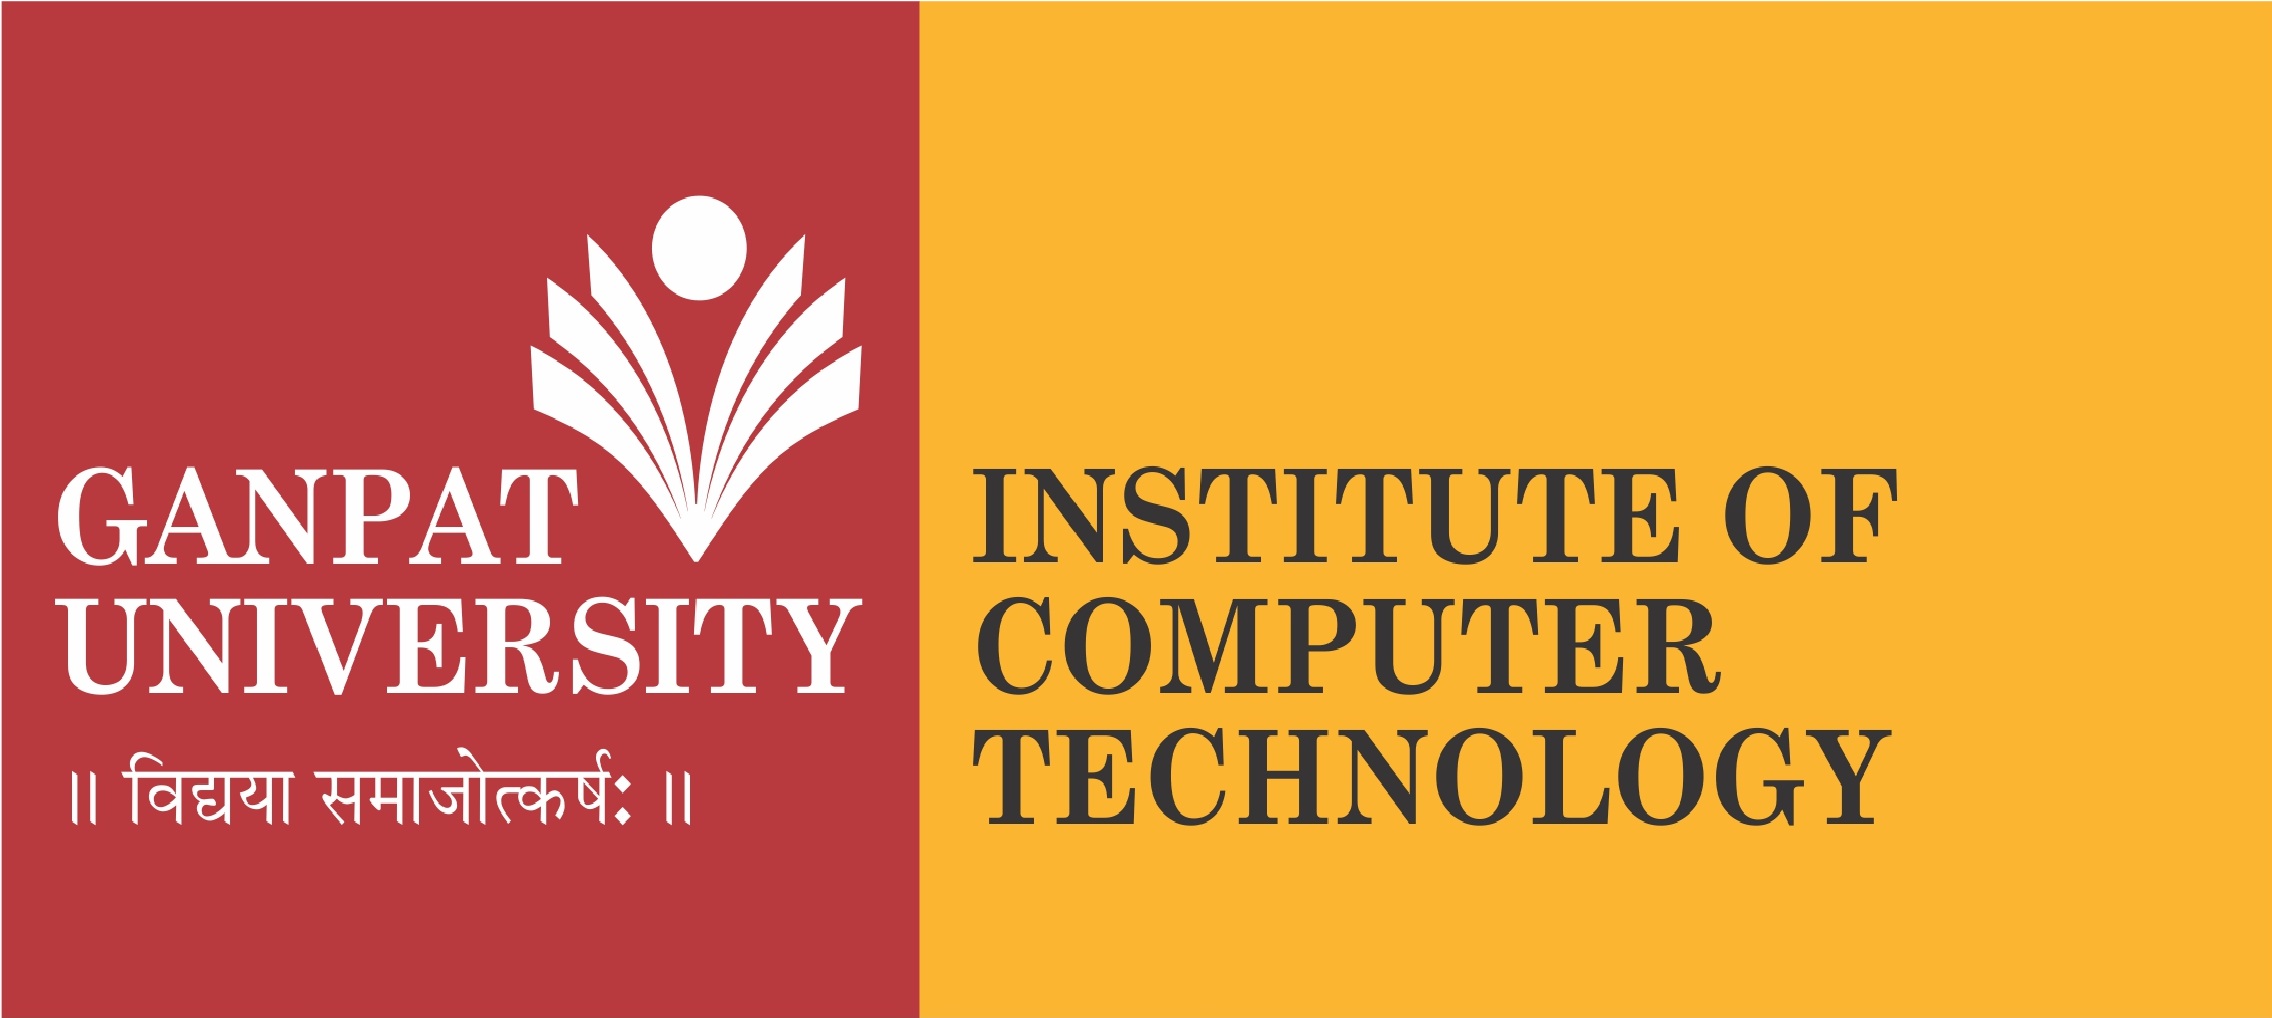 INSTITUTE OF COMPUTER TECHNOLOGY, GANPAT UNIVERSITY